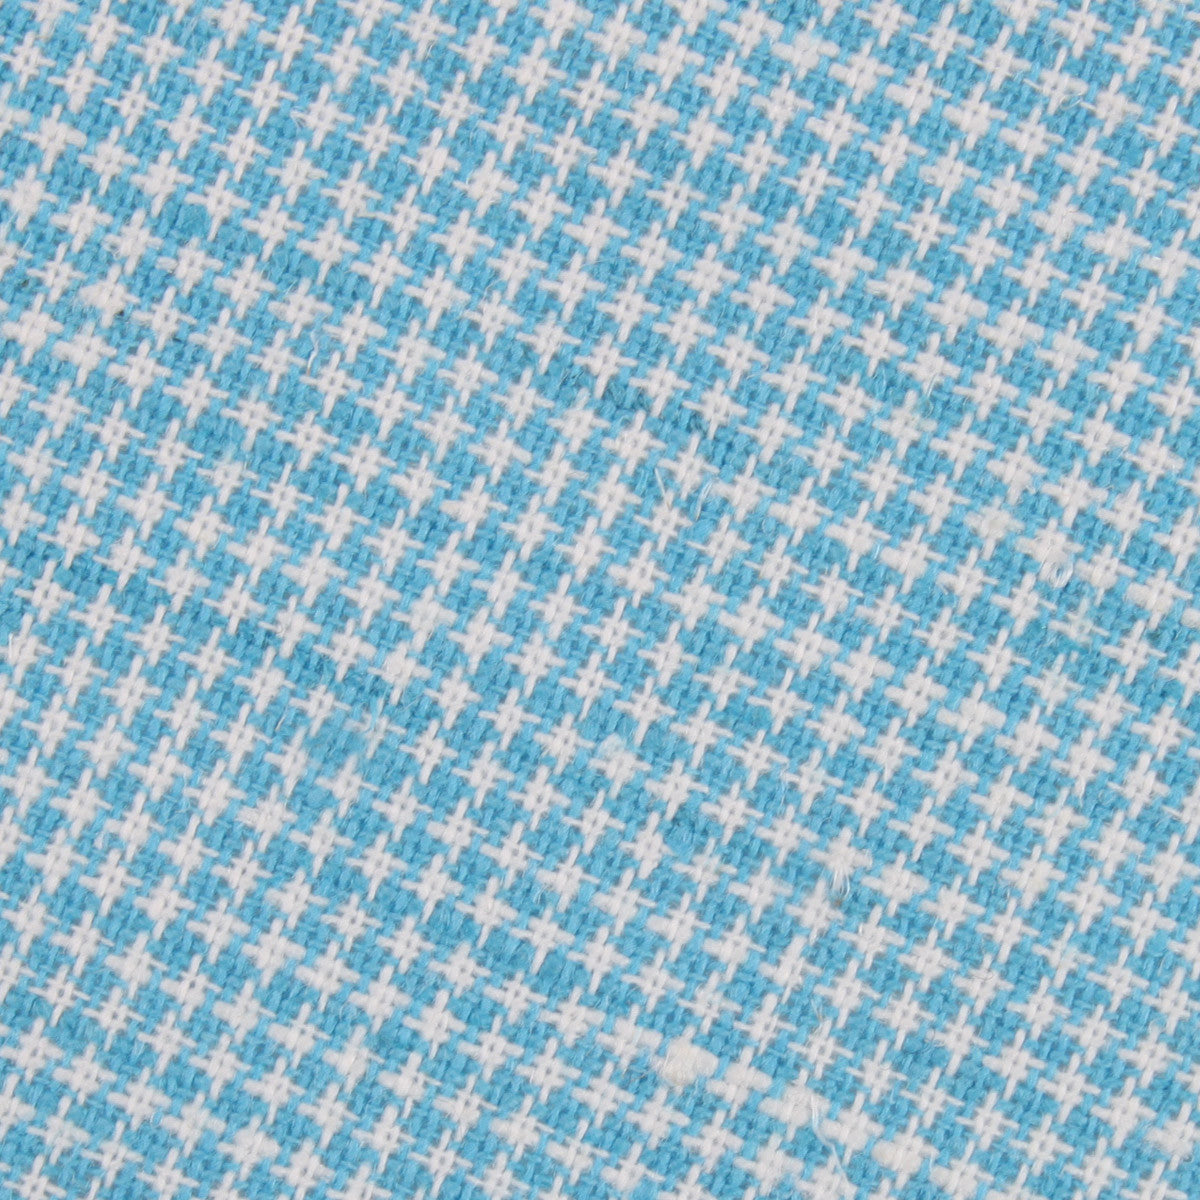 Blue Joy Houndstooth Linen Fabric Pocket Square